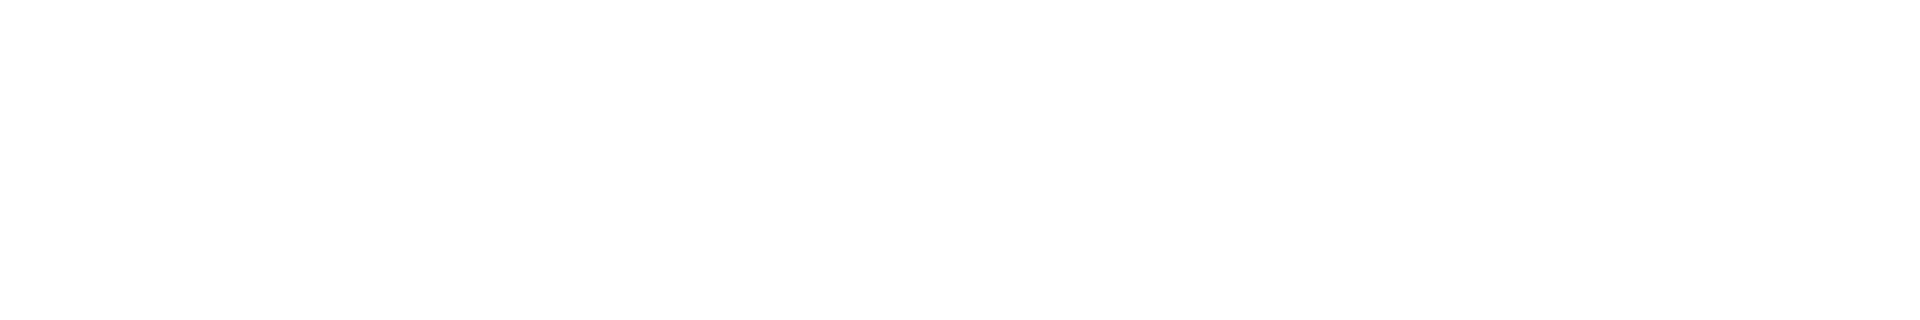 深圳宇行科技-VIP banner 2